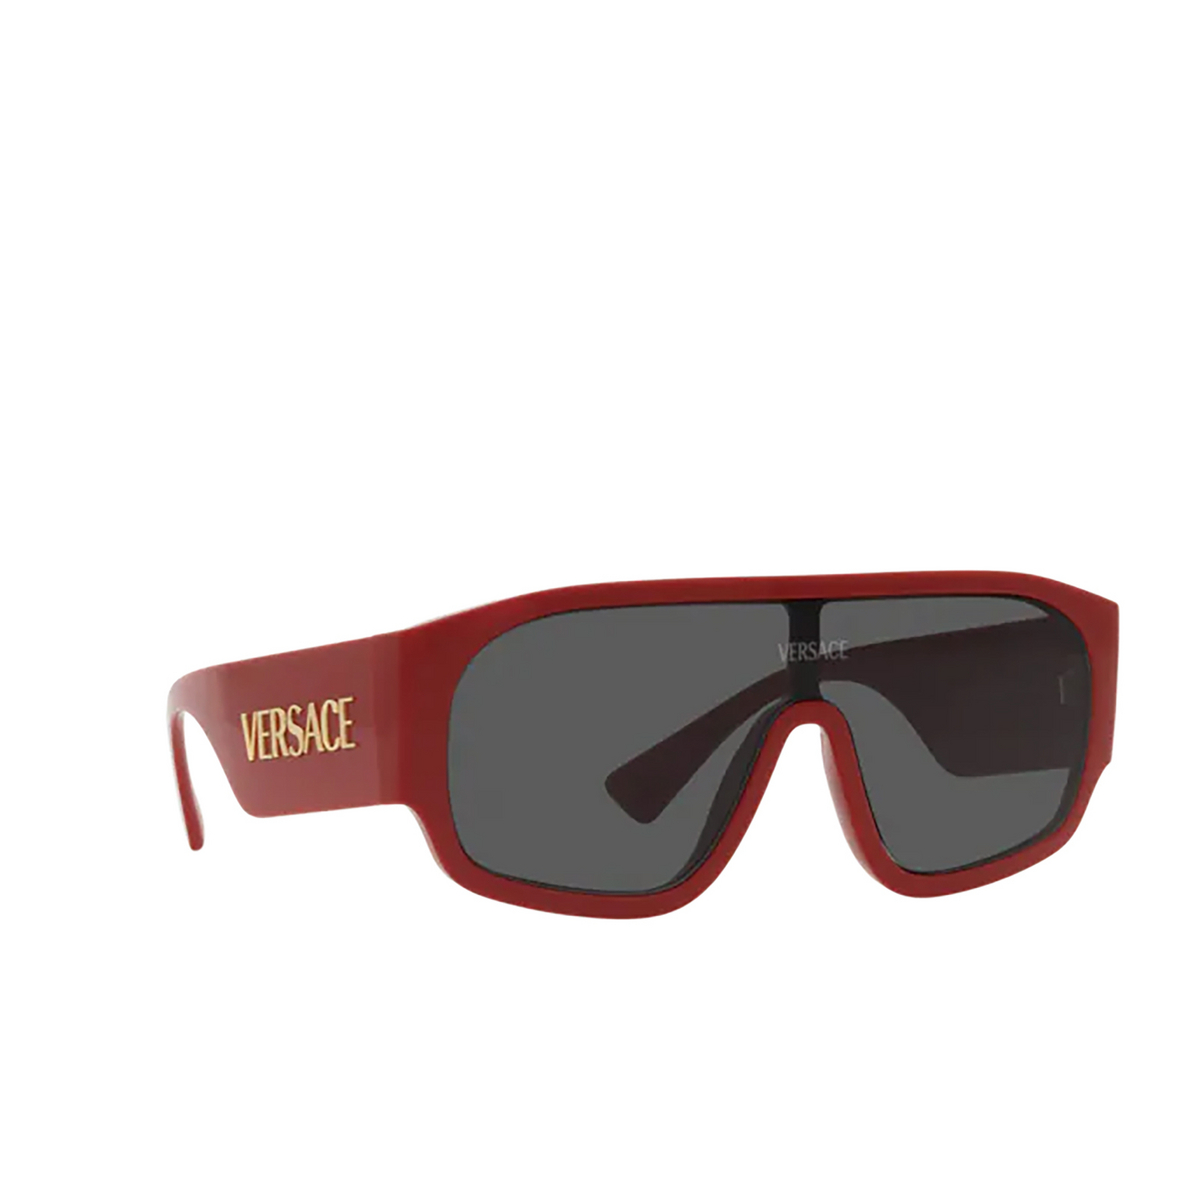 Versace VE4439 Sunglasses 538887 Red - three-quarters view